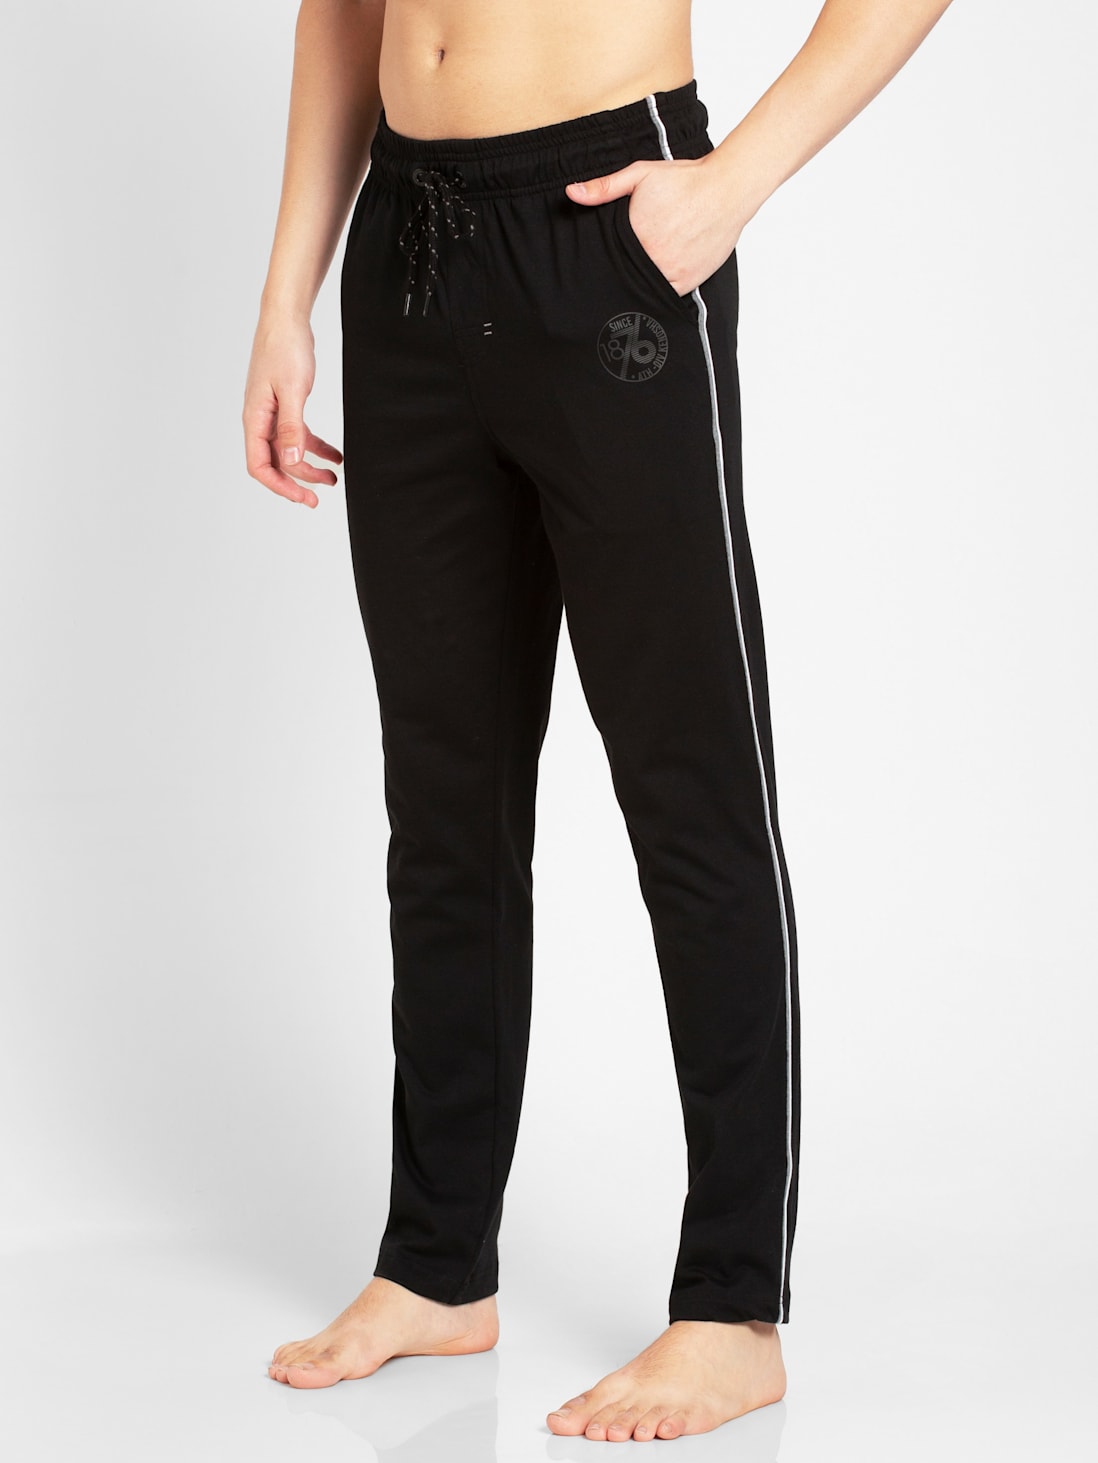 Buy Jockey Black Jersey Pants - 9500 for Men Online @ Tata CLiQ